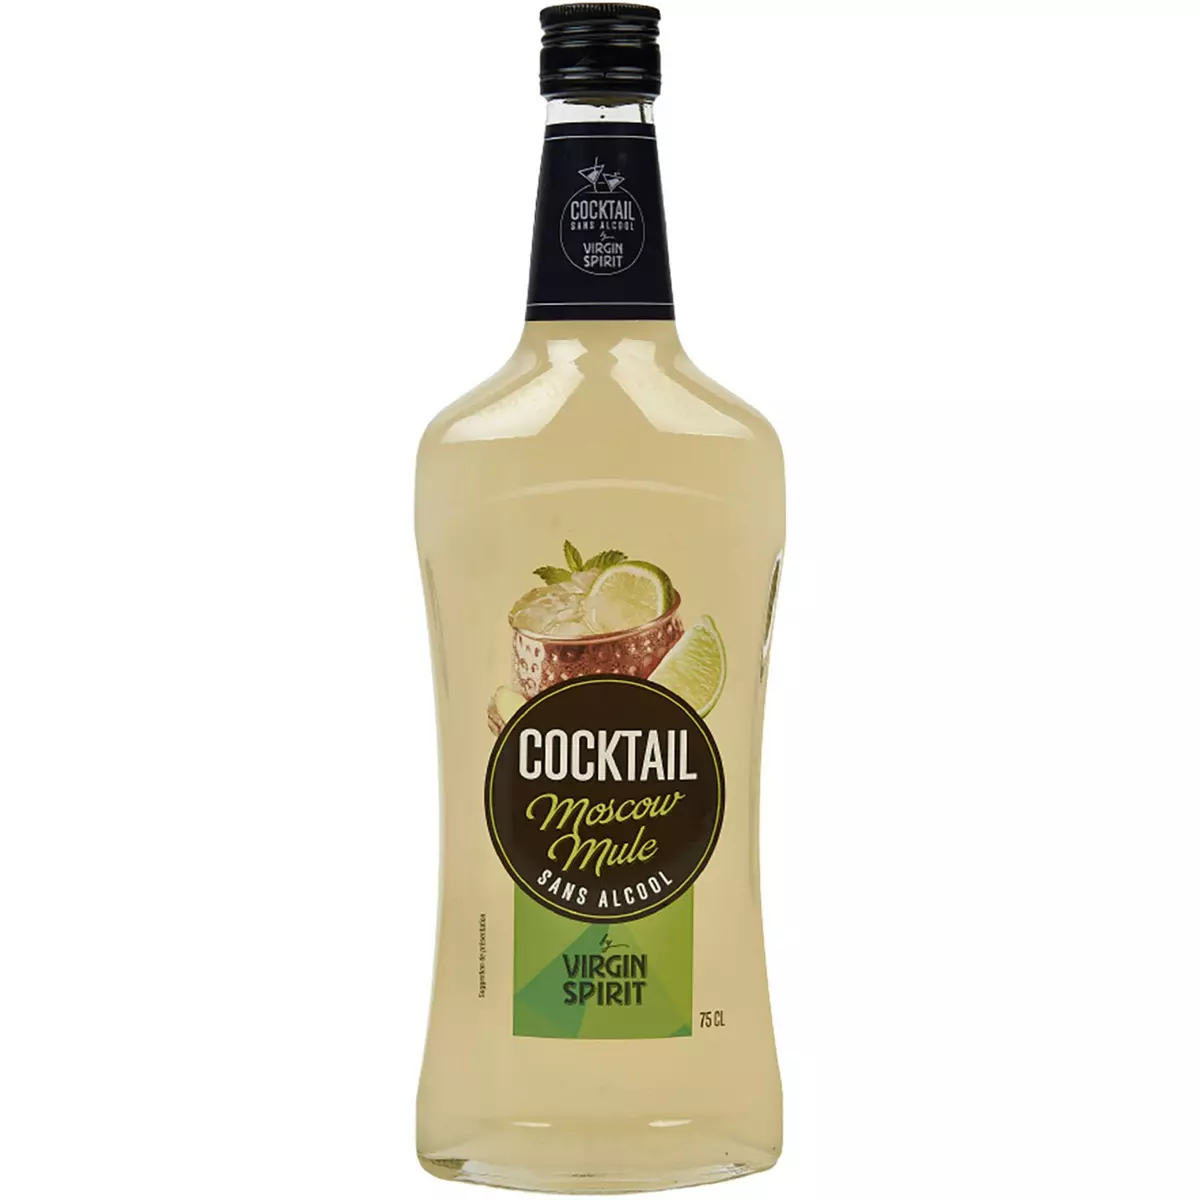 VIRGIN SPIRIT Cocktail mai tai sans alcool 75cl